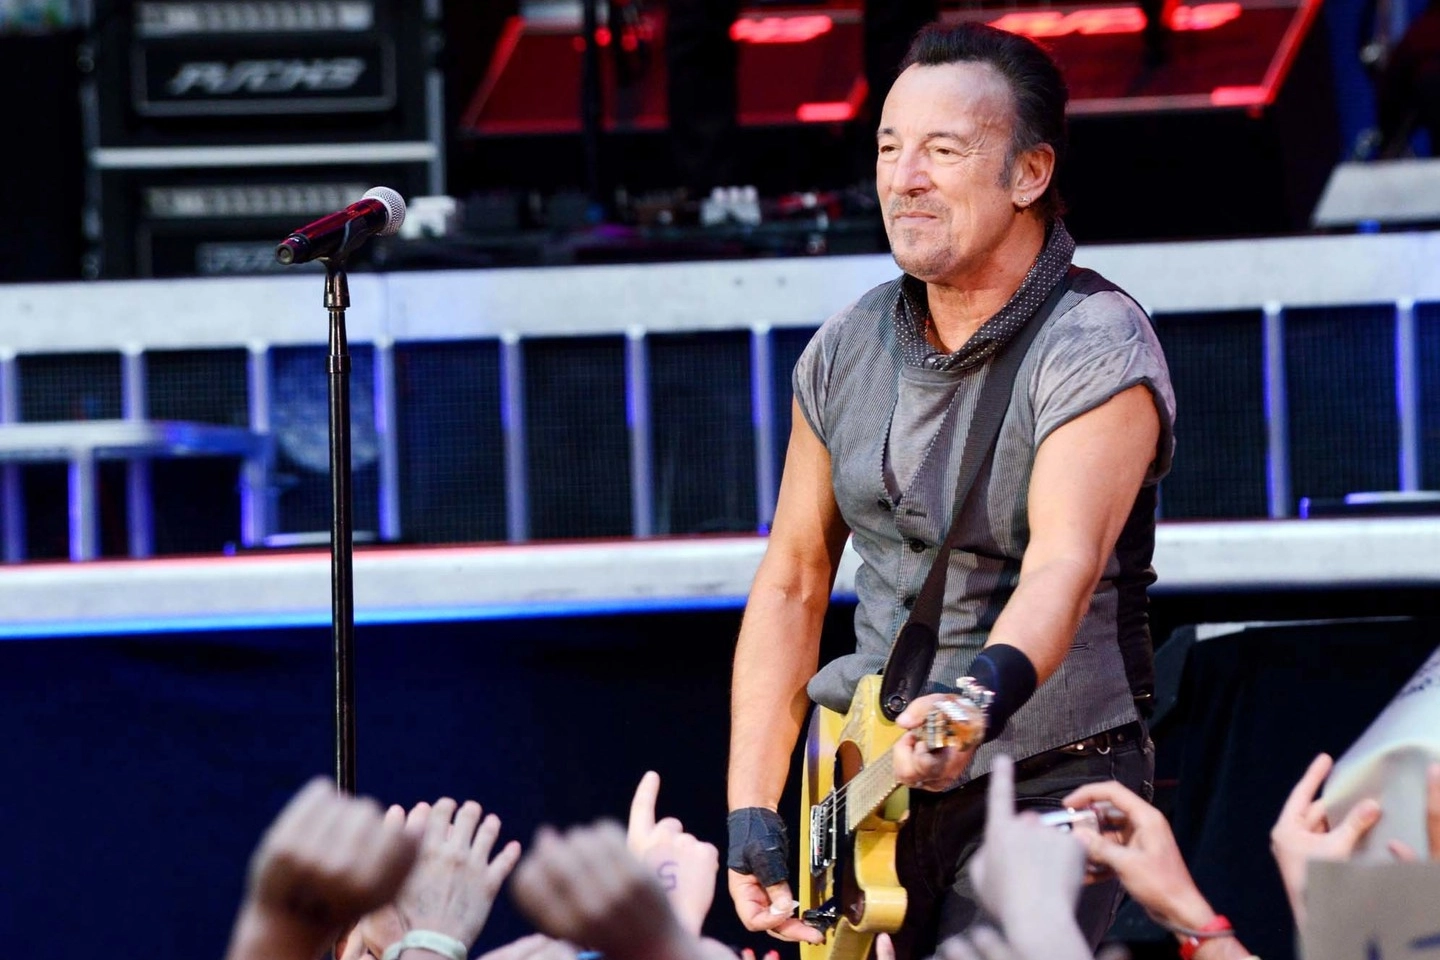 Bruce Springsteen will play Gerasia Park at Monza Park